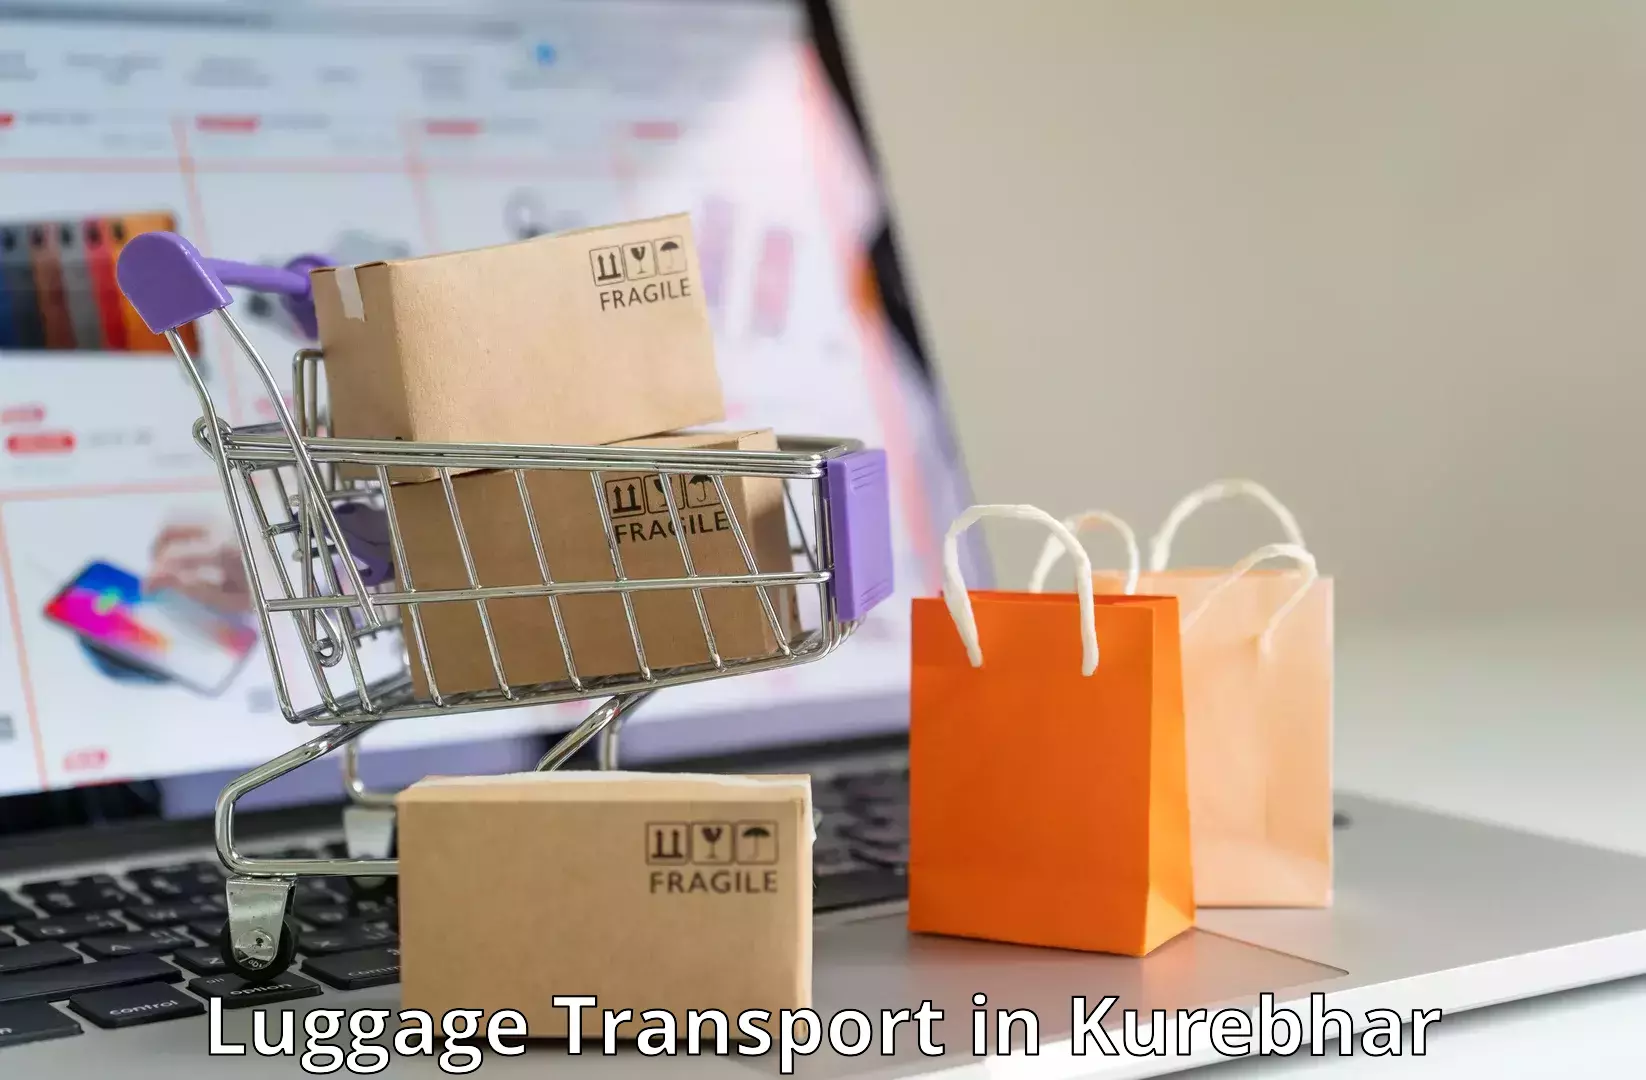 Luggage forwarding service in Kurebhar